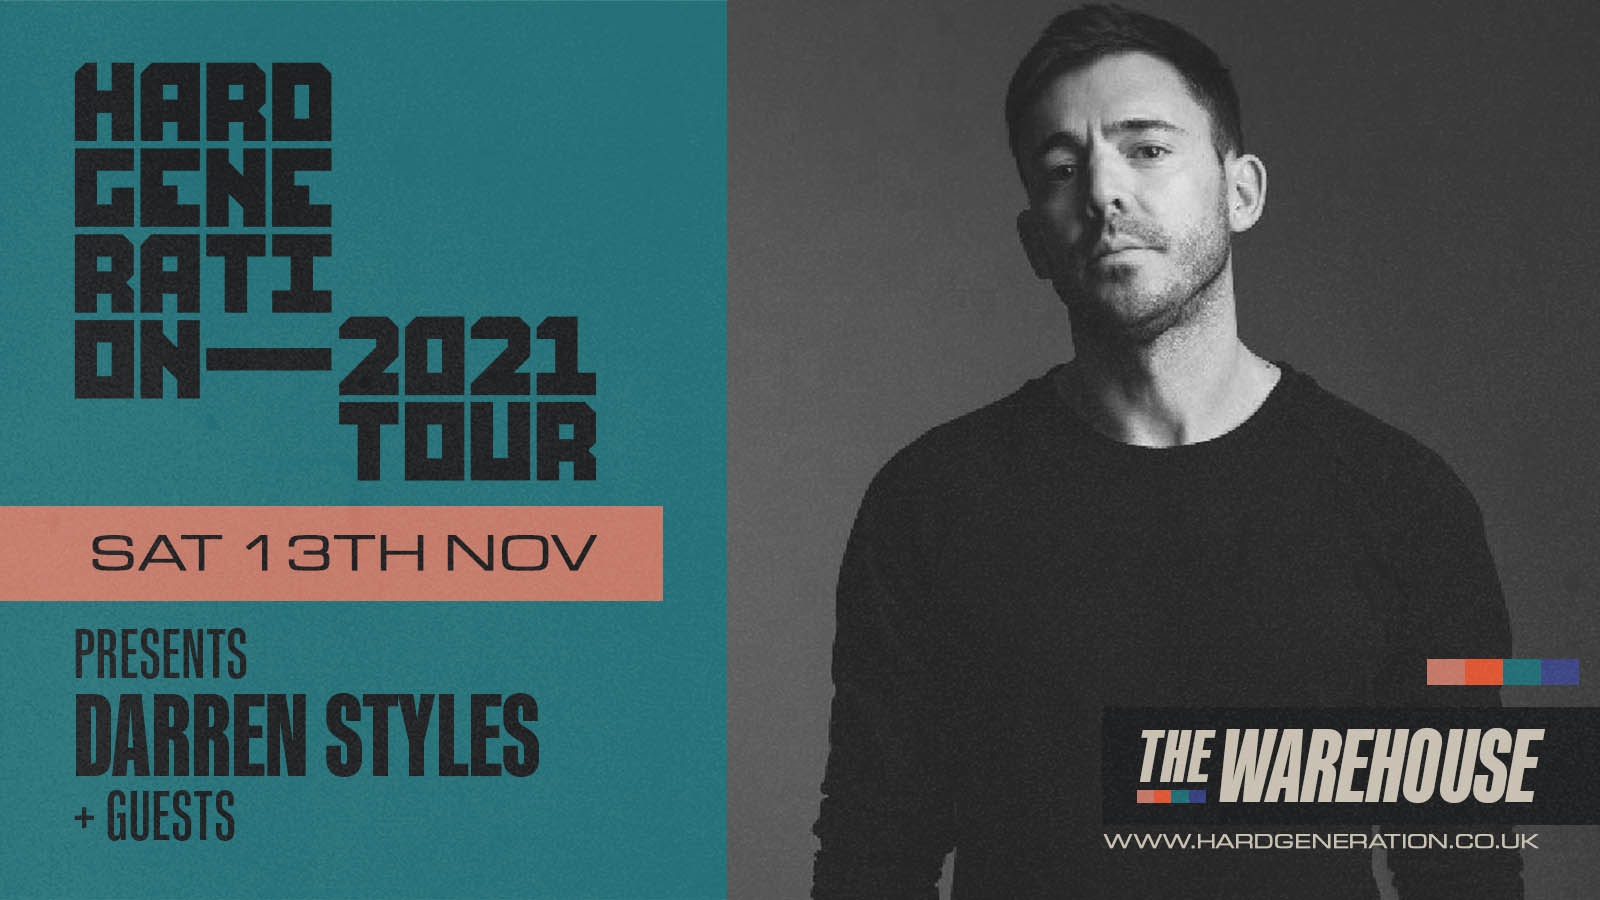 Hard Generation 2021 Tour presents Darren Styles – Club